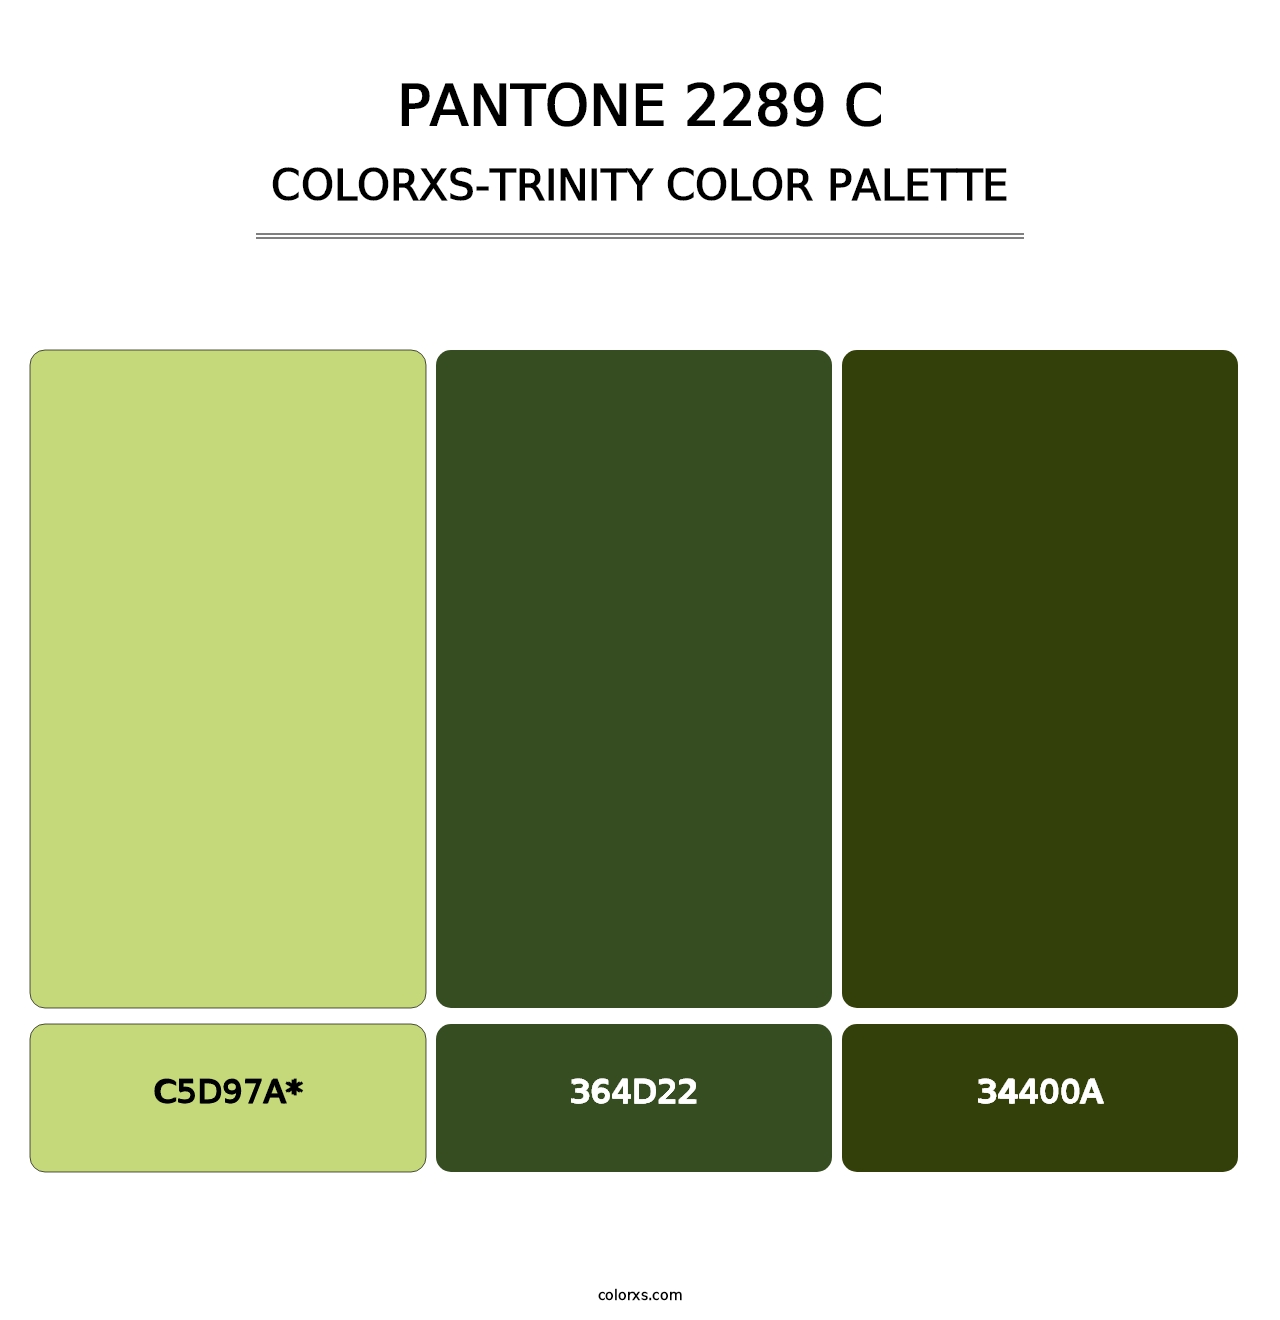 PANTONE 2289 C - Colorxs Trinity Palette